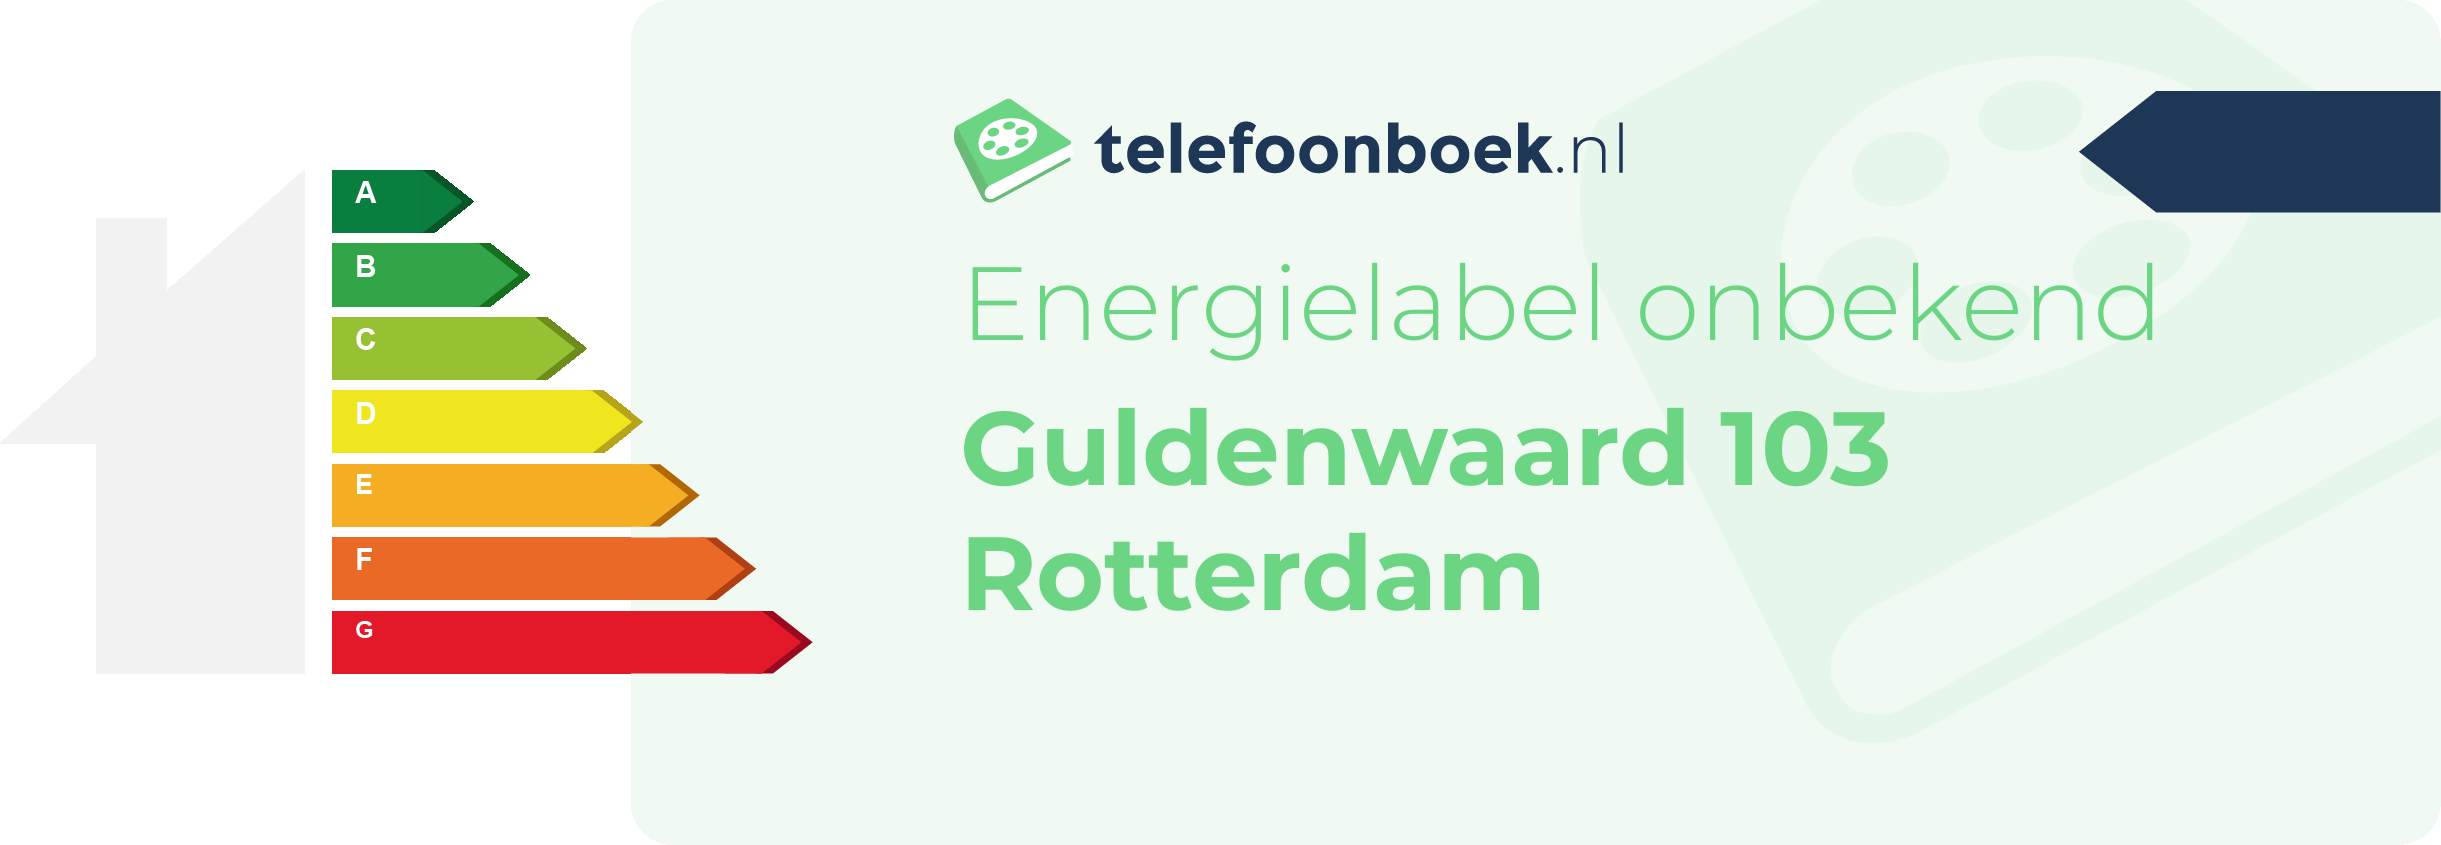 Energielabel Guldenwaard 103 Rotterdam